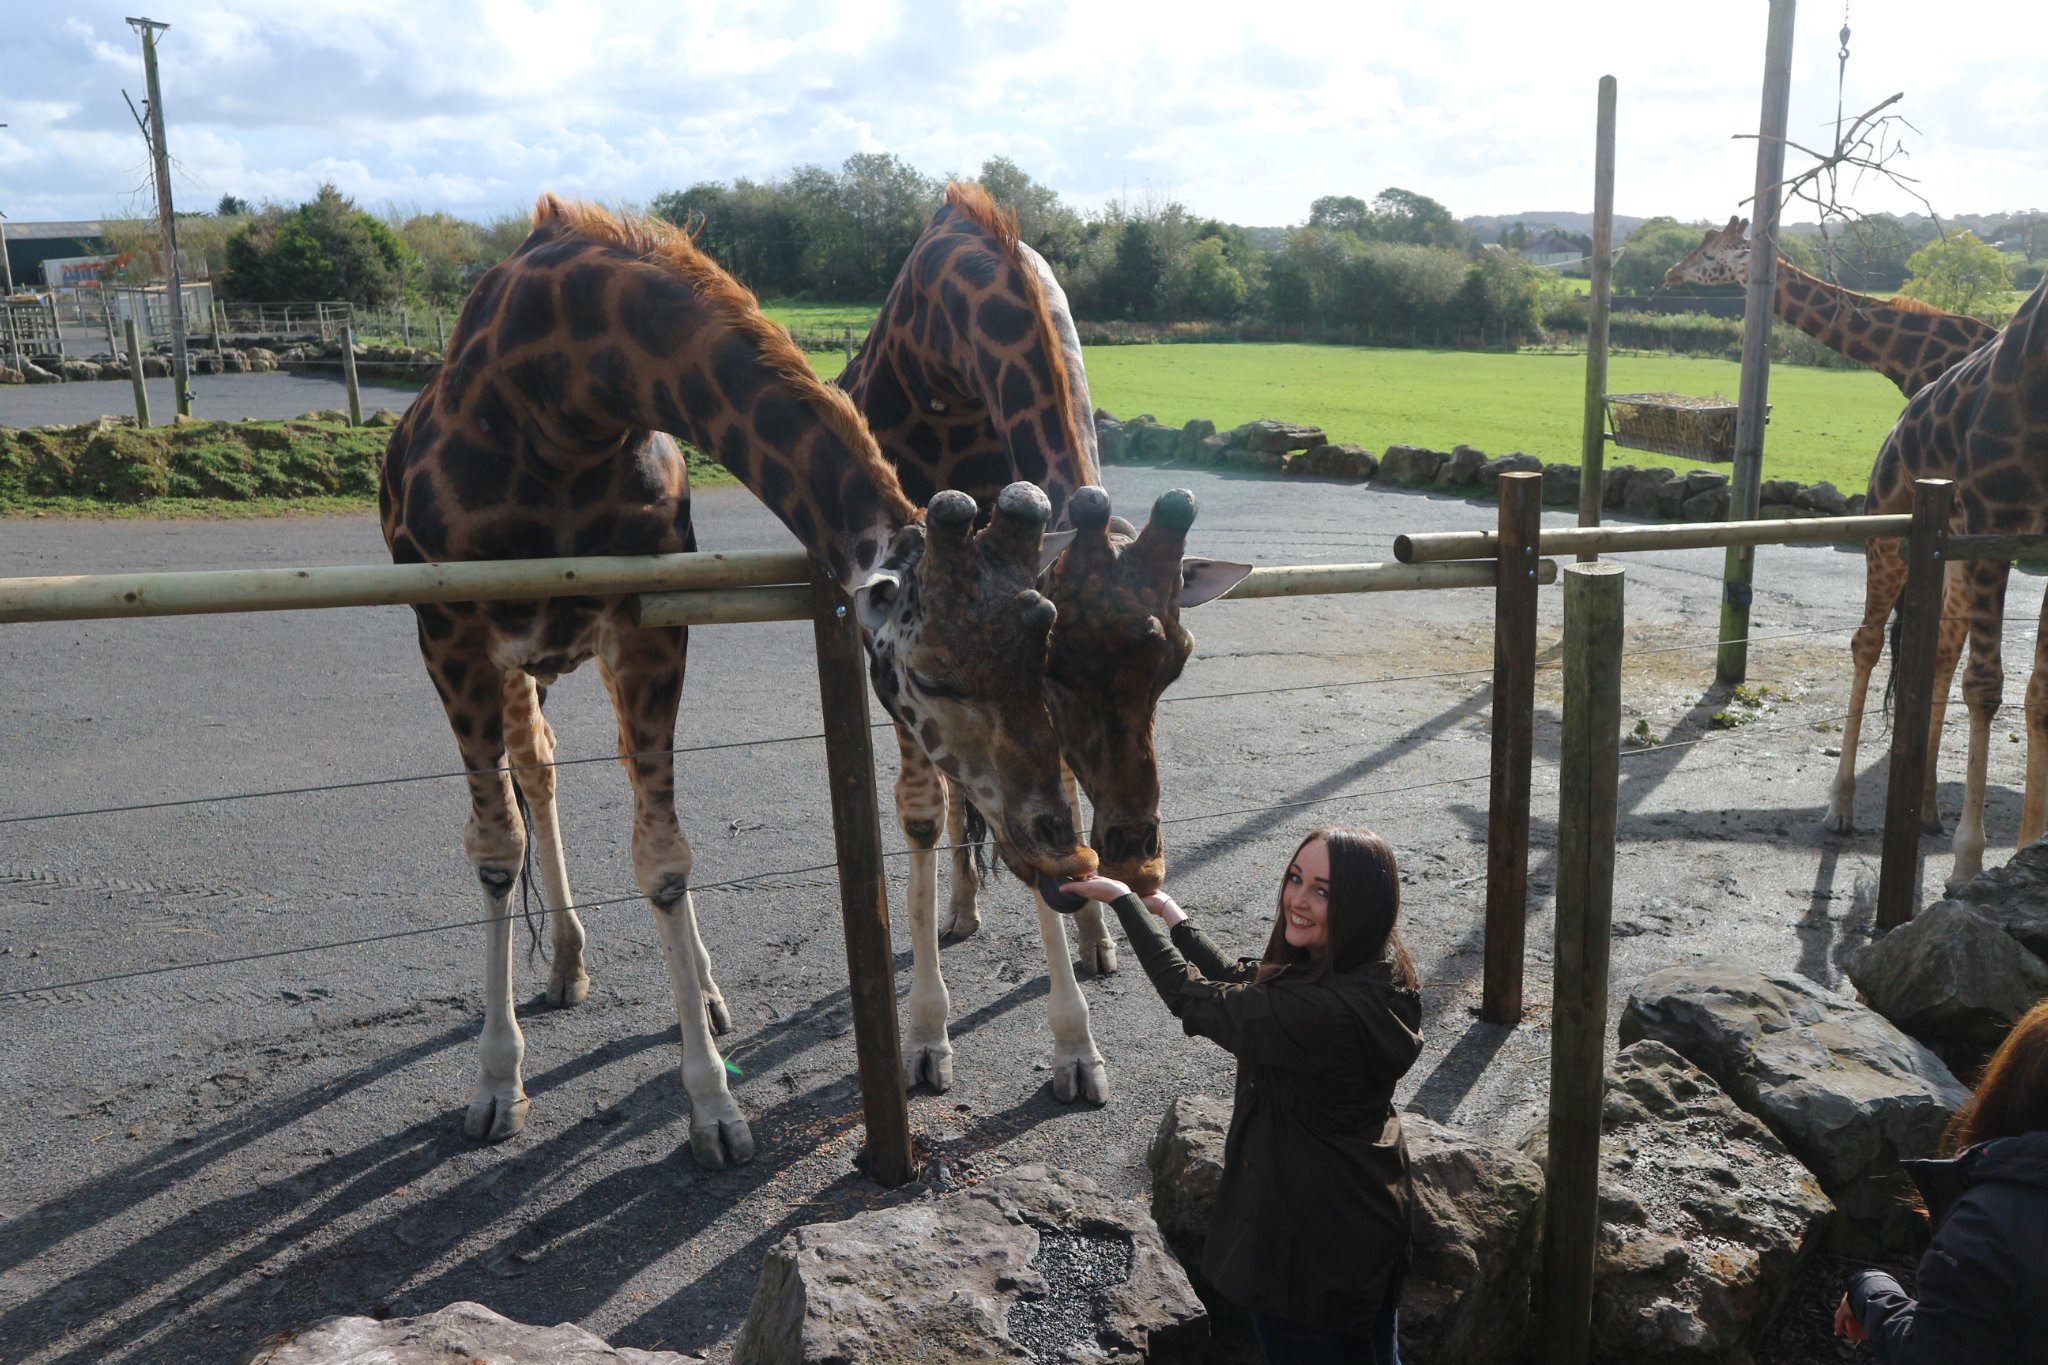 Zoo and Farm Animal Experiences at Folly Farm in Wales